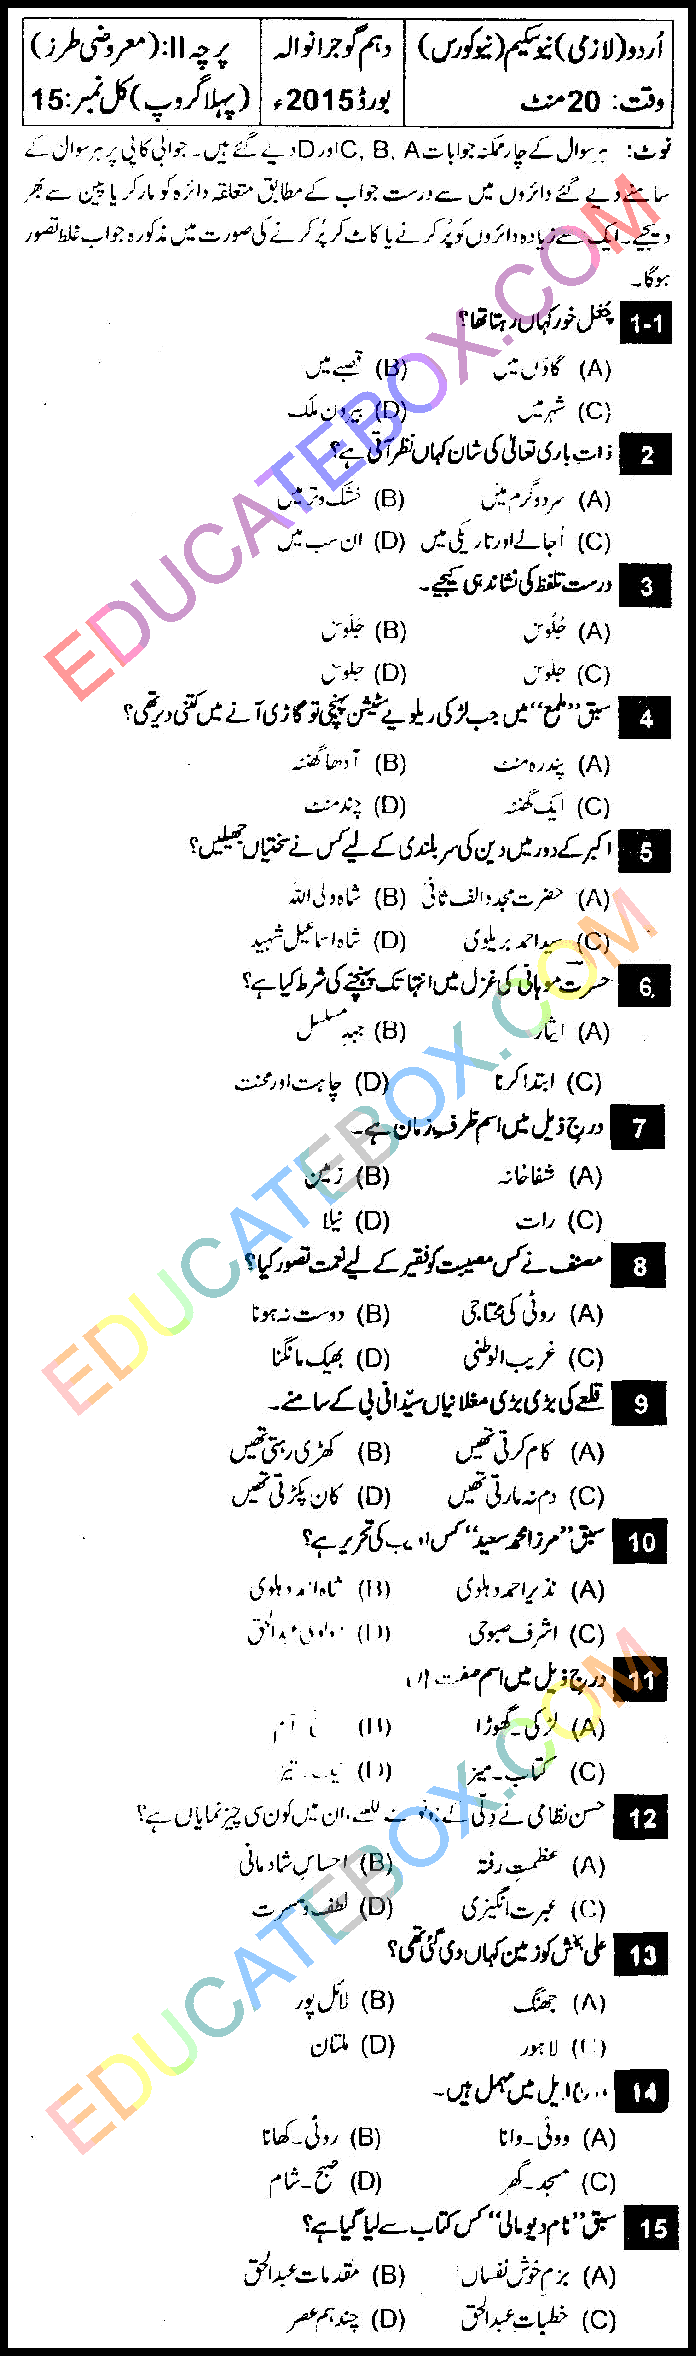 Past Paper 10th Class Urdu Gujranwala Board 2015 Group 1 Objective Type اپ ٹو ڈیٹ پیپر اردو 2015 پہلا گروپ جماعت دہم گوجرانوالہ بورڈ معروضی طرز